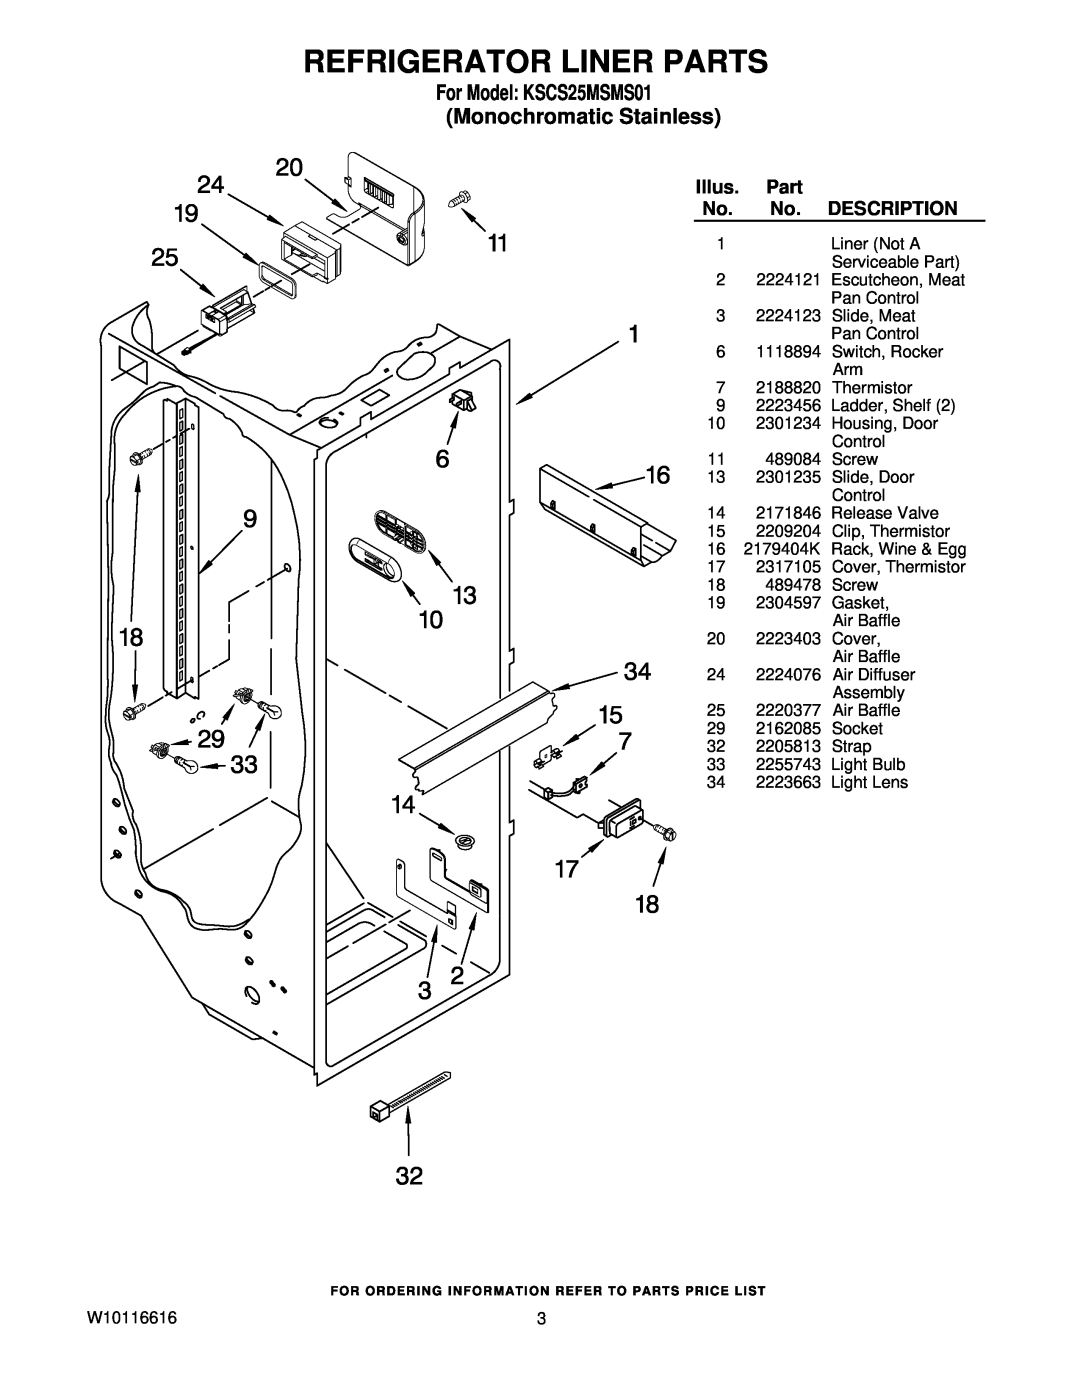 KitchenAid manual Refrigerator Liner Parts, Illus, Description, For Model KSCS25MSMS01 Monochromatic Stainless 